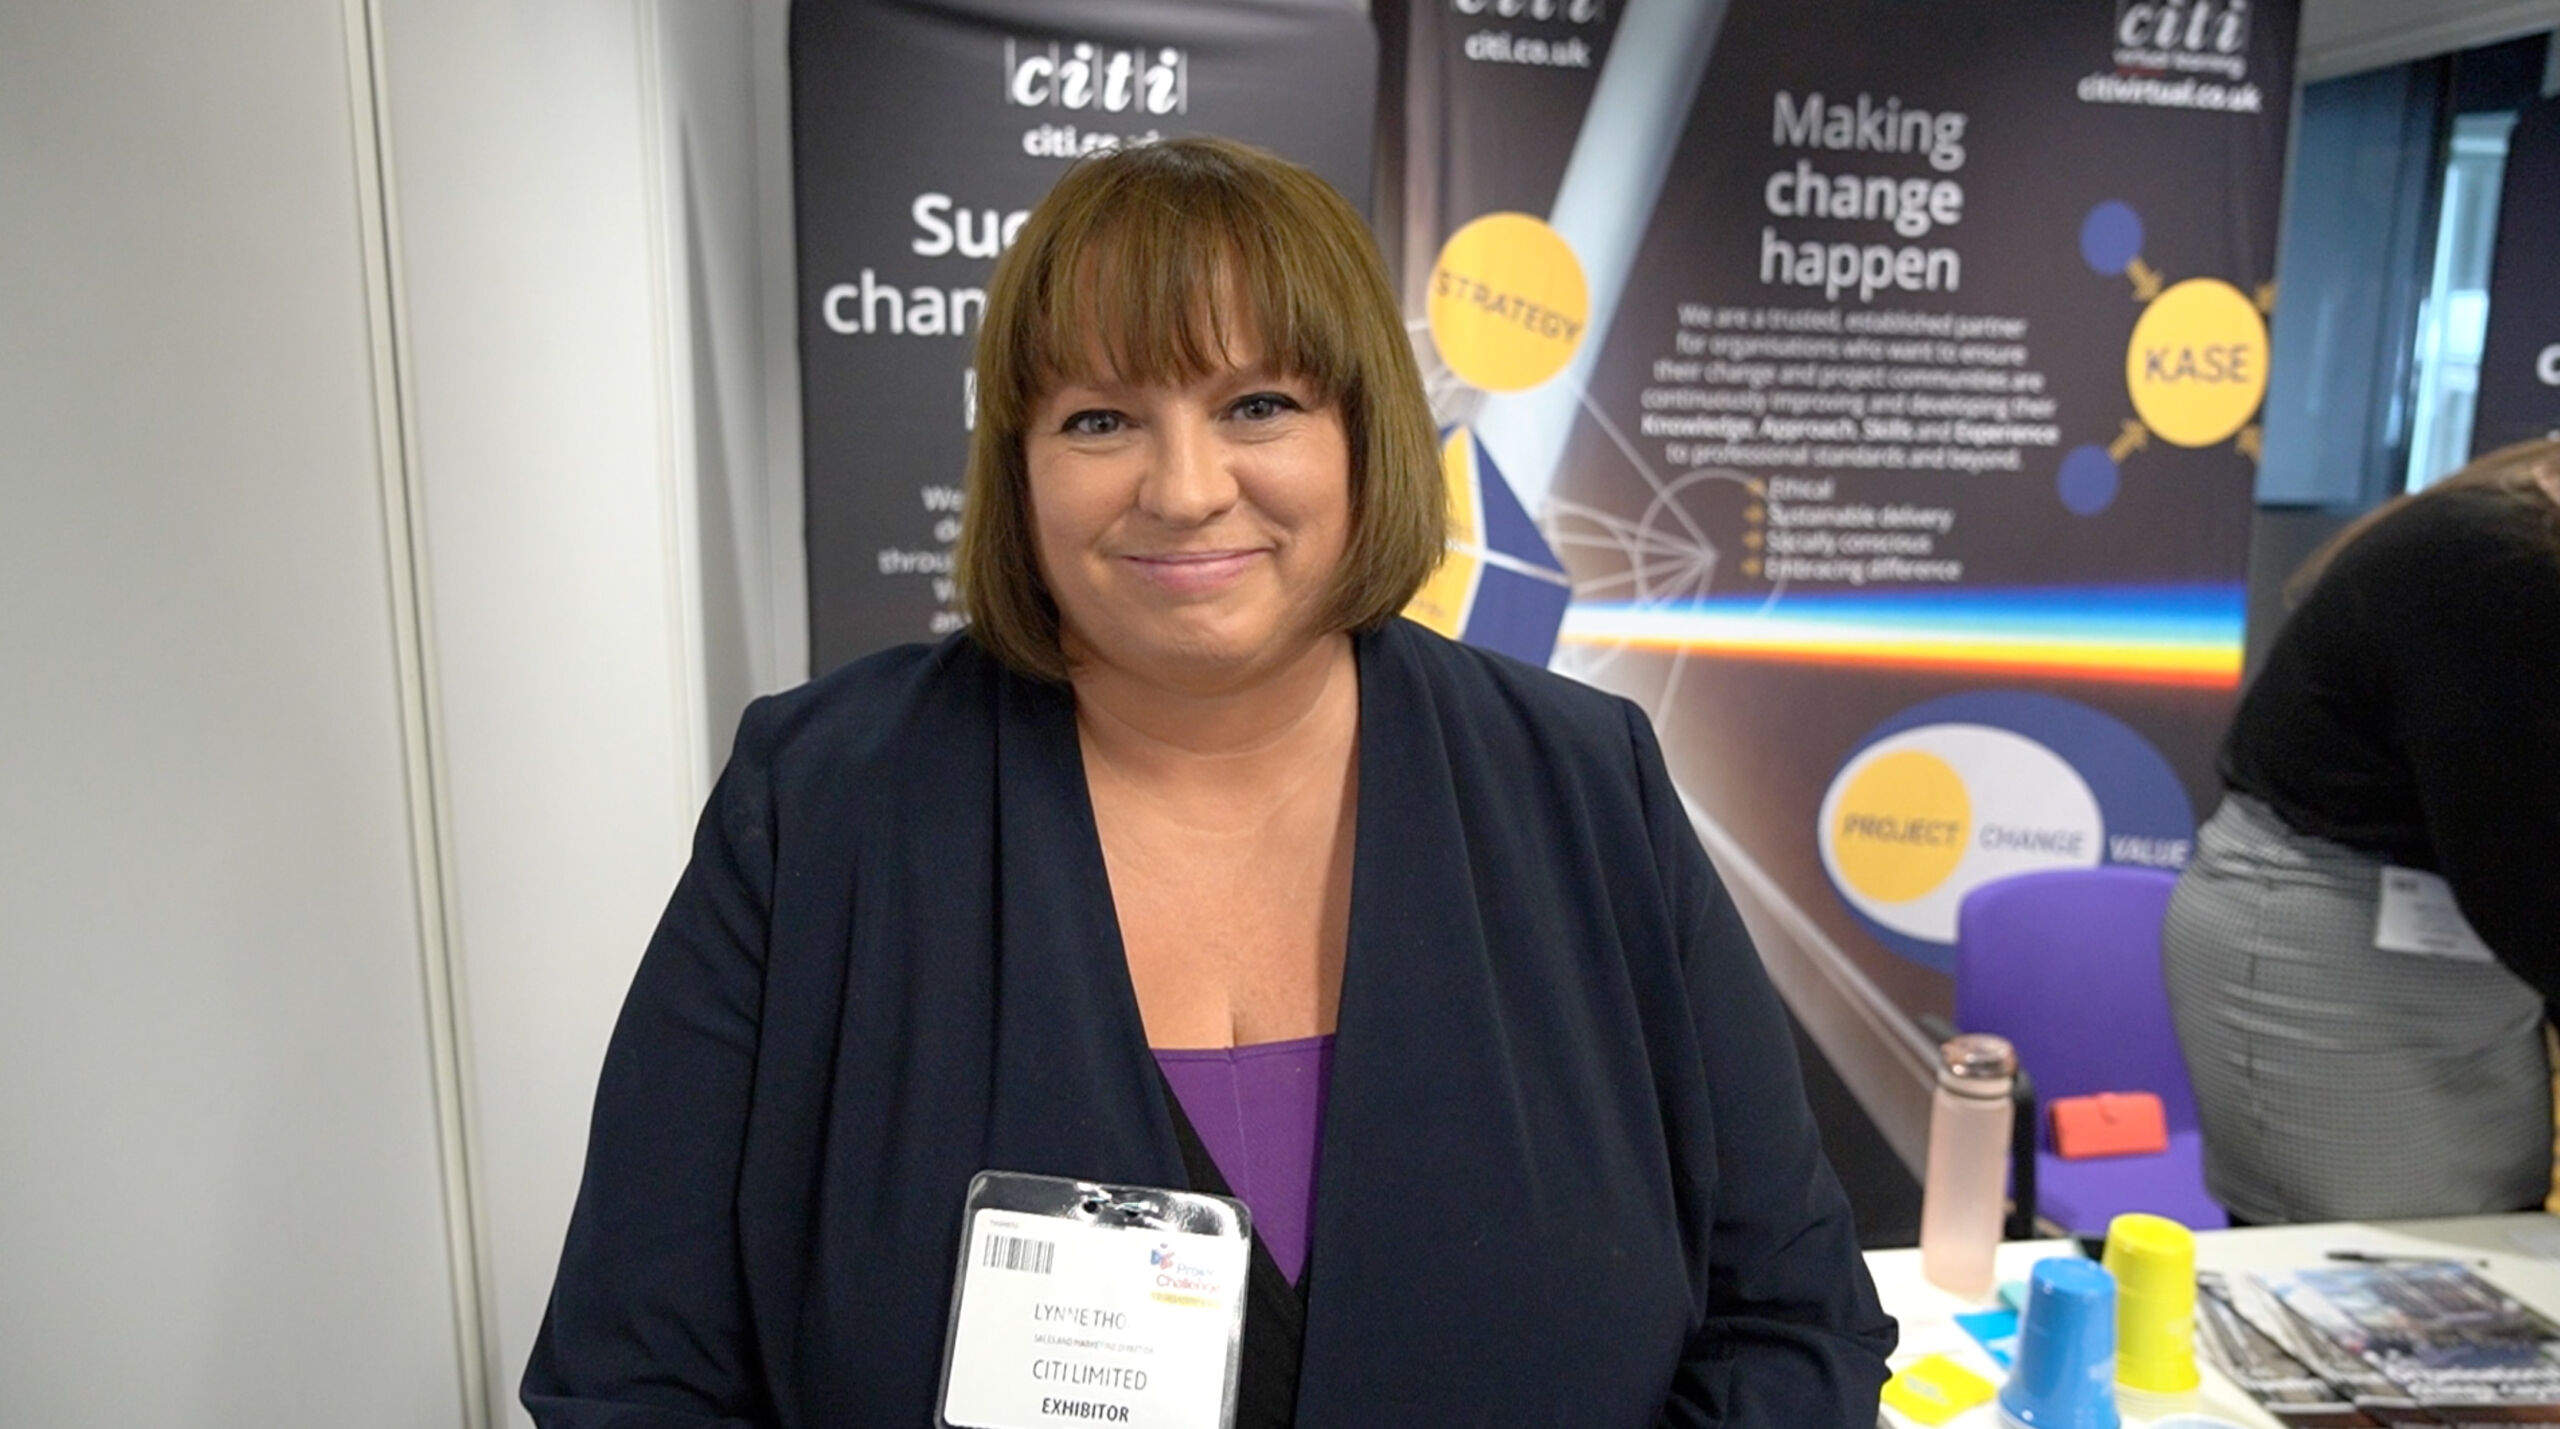 Lynne Thorne, Business Development Director at CITI